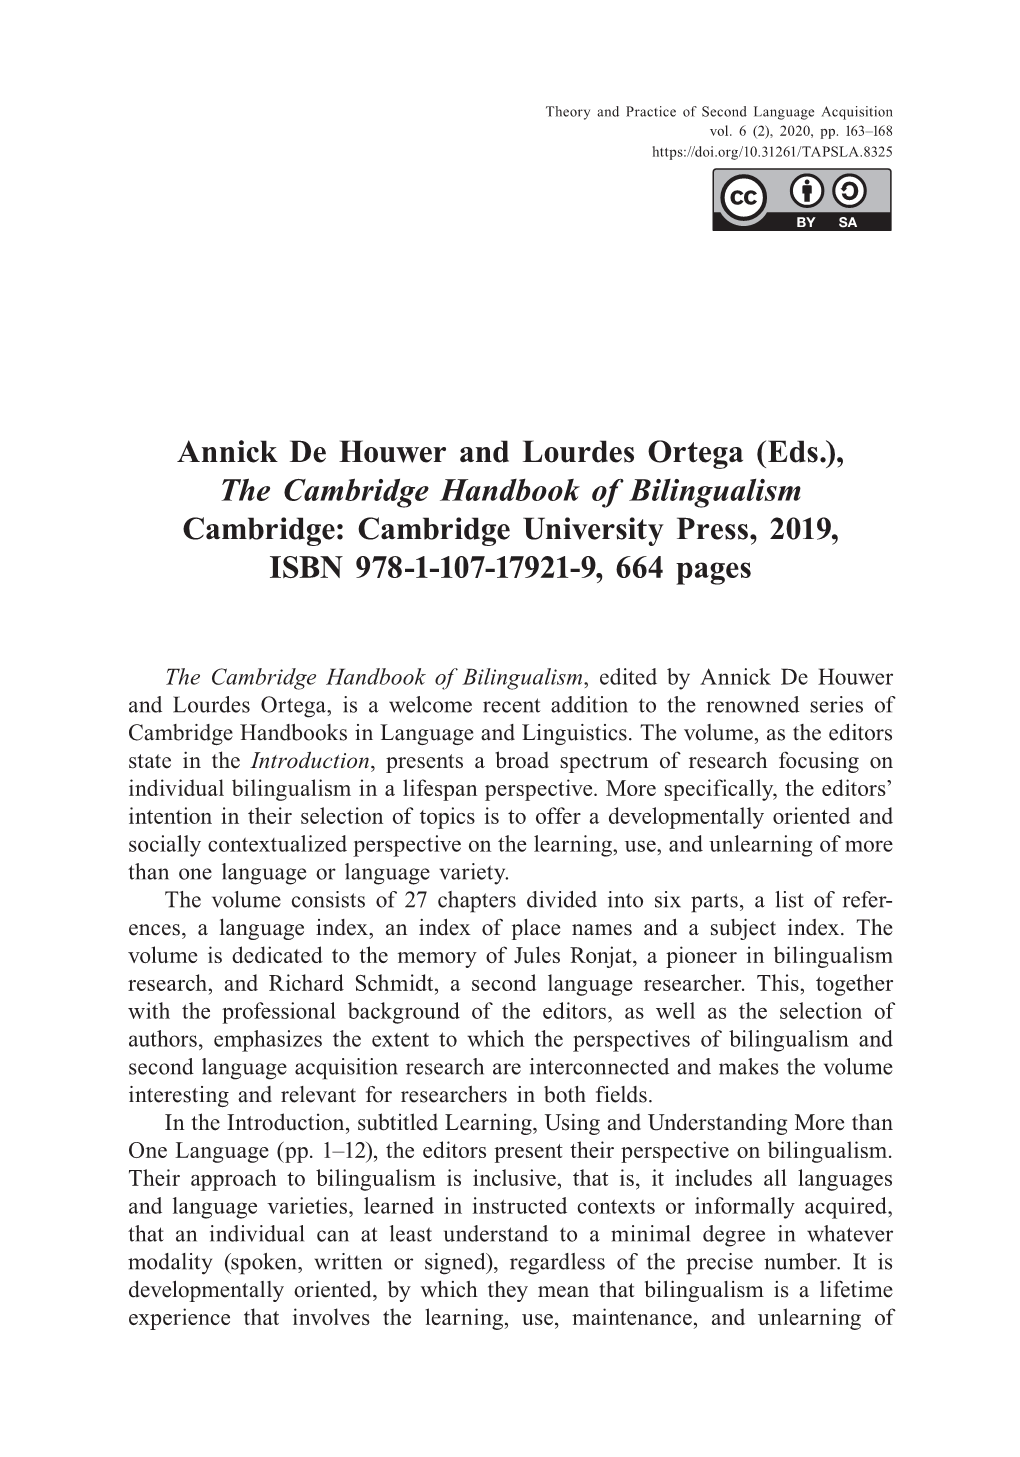 Annick De Houwer and Lourdes Ortega (Eds.), the Cambridge Handbook of Bilingualism Cambridge: Cambridge University Press, 2019, ISBN 978-1-107-17921-9, 664 Pages